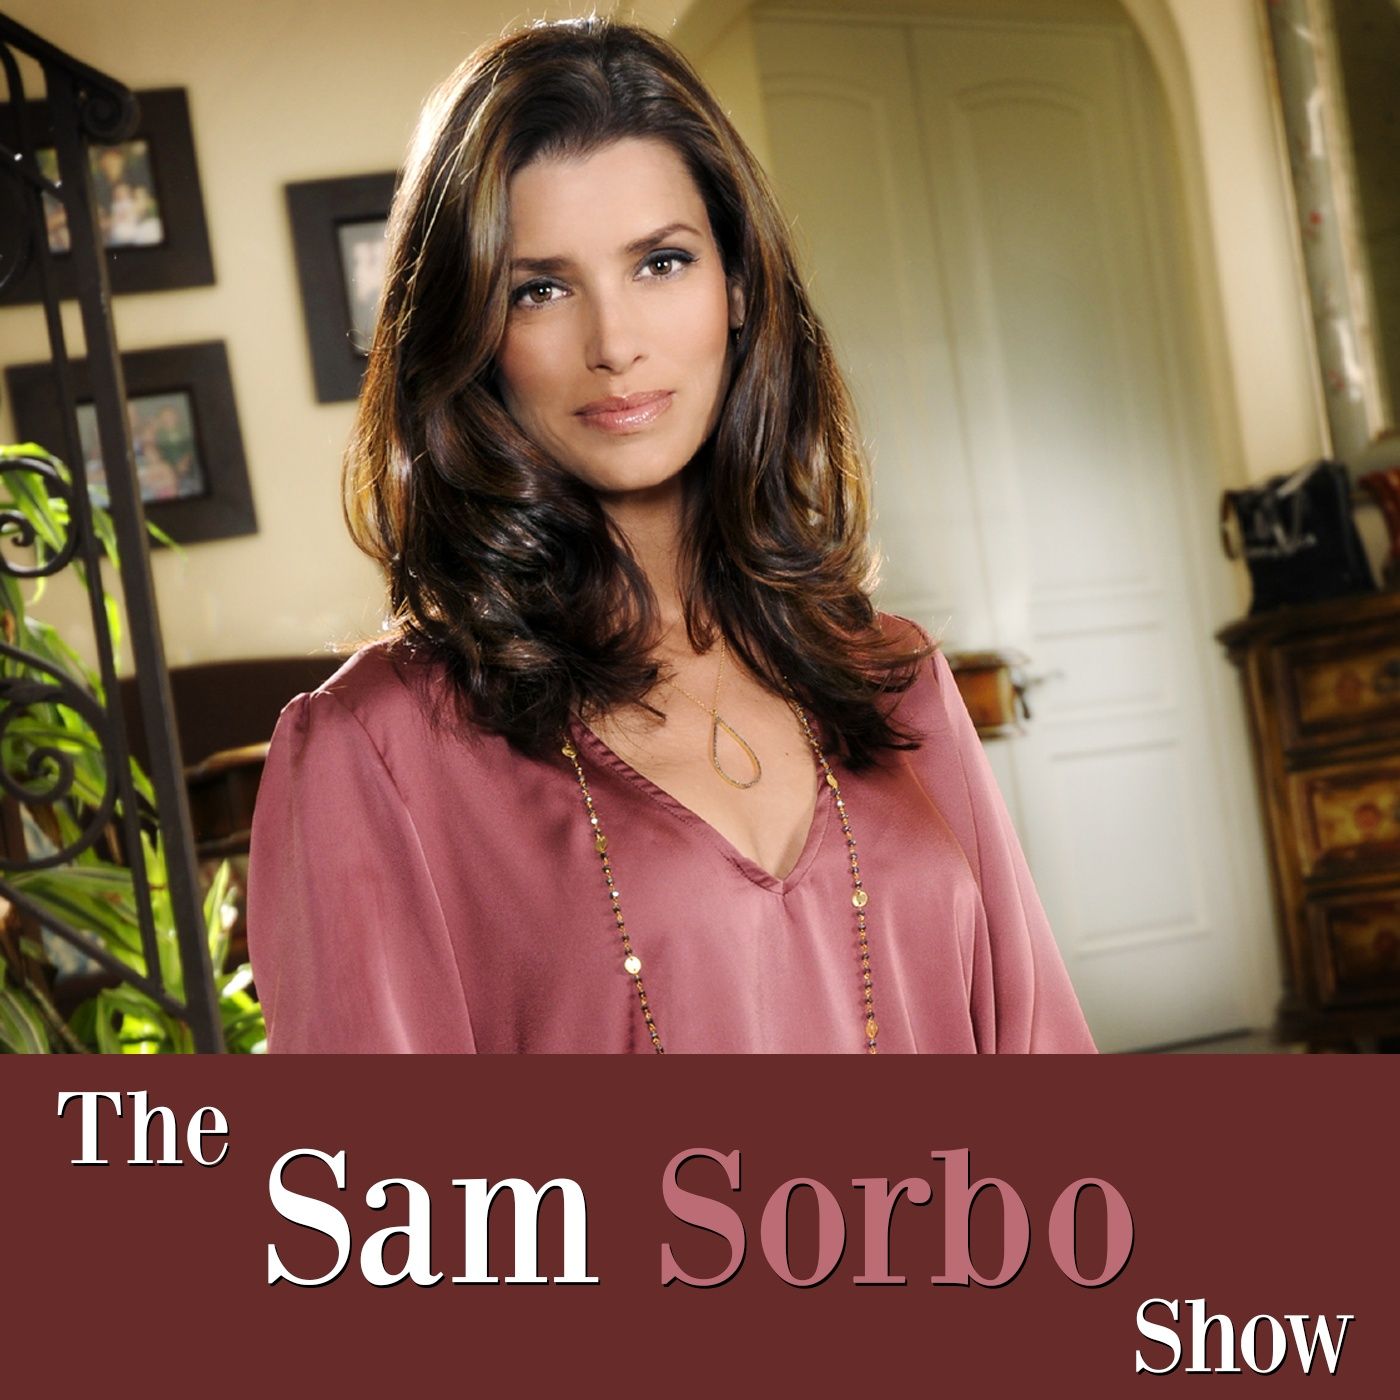 The Sam Sorbo Show. 